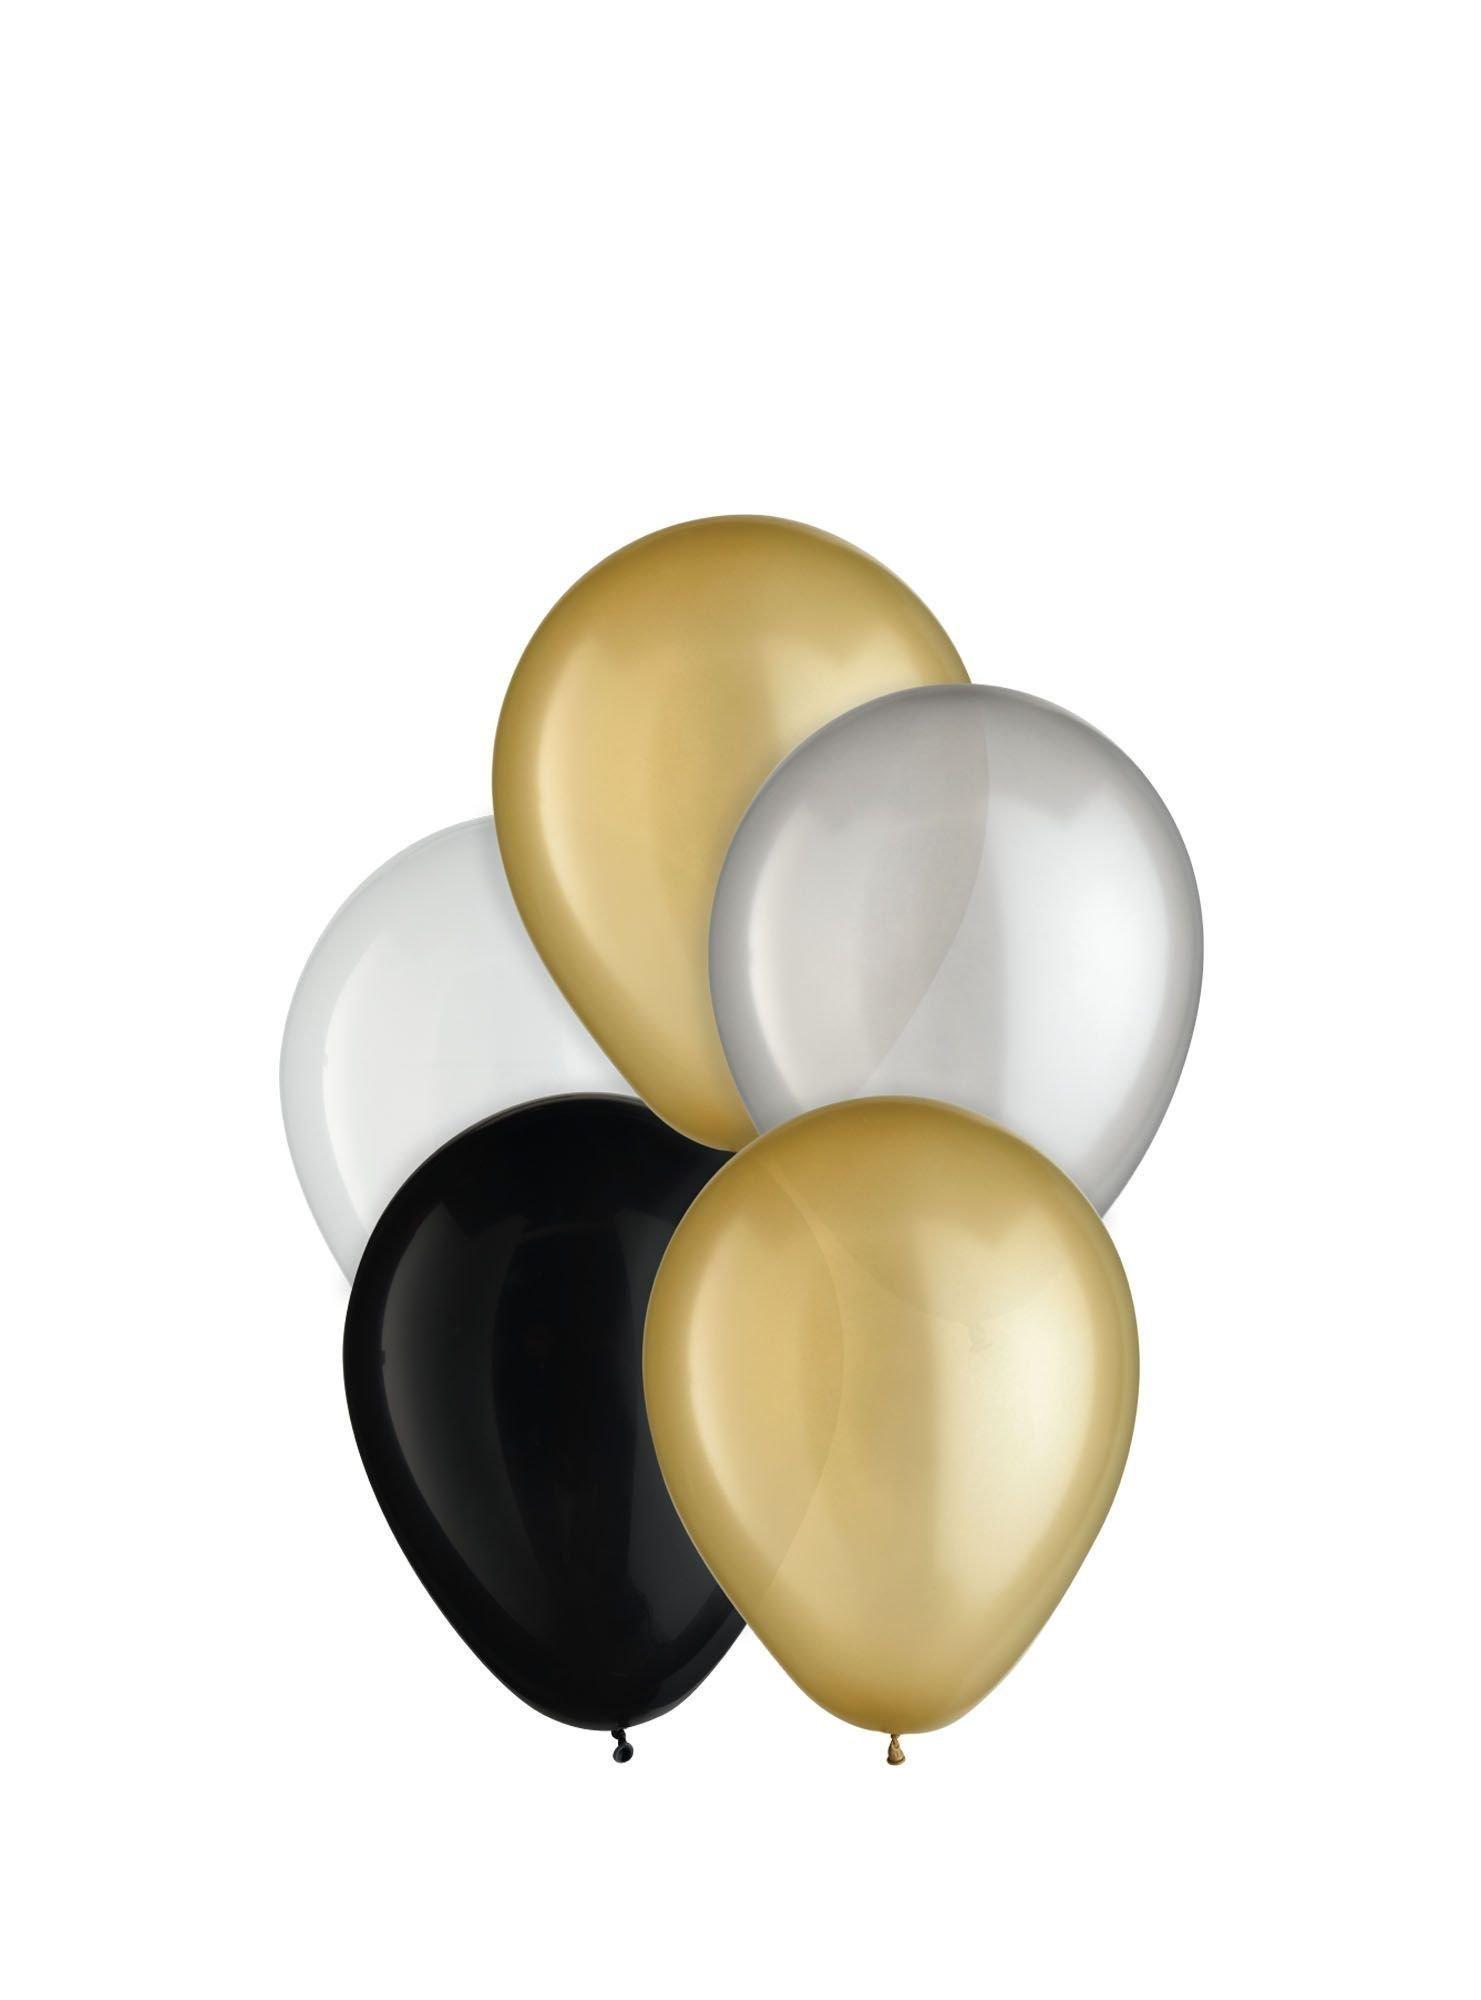 Air-Filled Black, Silver & Gold Number (50) Tabletop or Hangable Balloon Hoop Kit